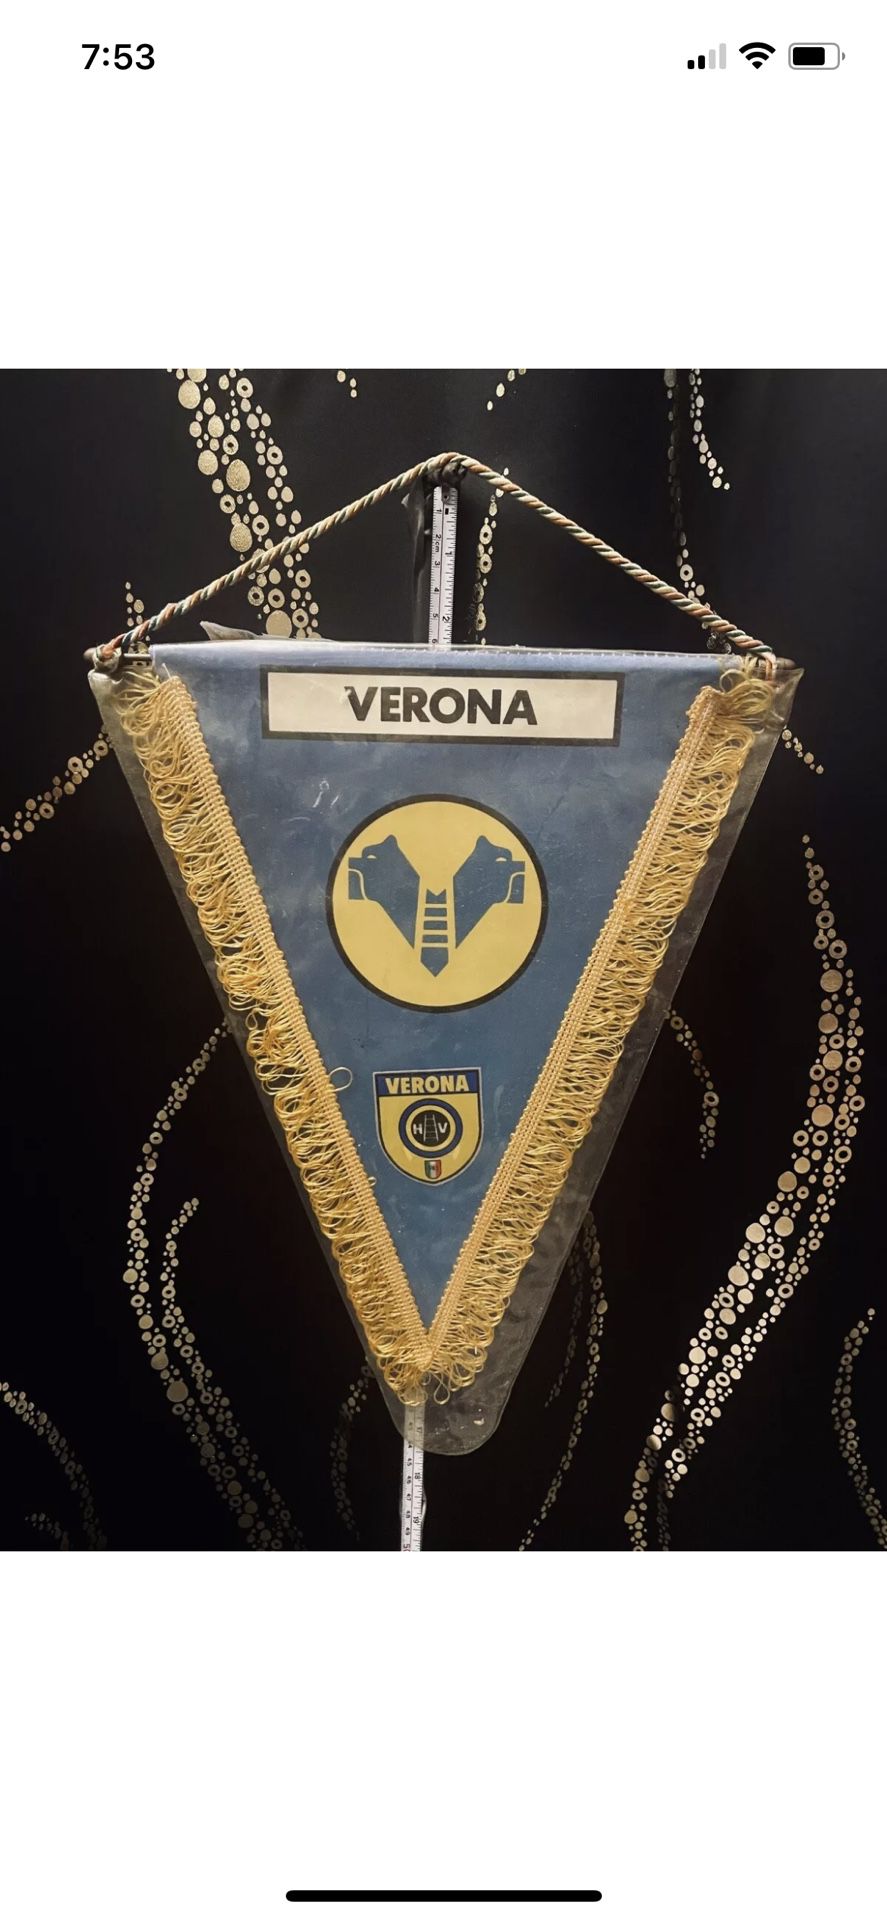 VERONA : Vintage Football Soccer Gagliardetto / Bandierina / Pennant 14”x11.5”